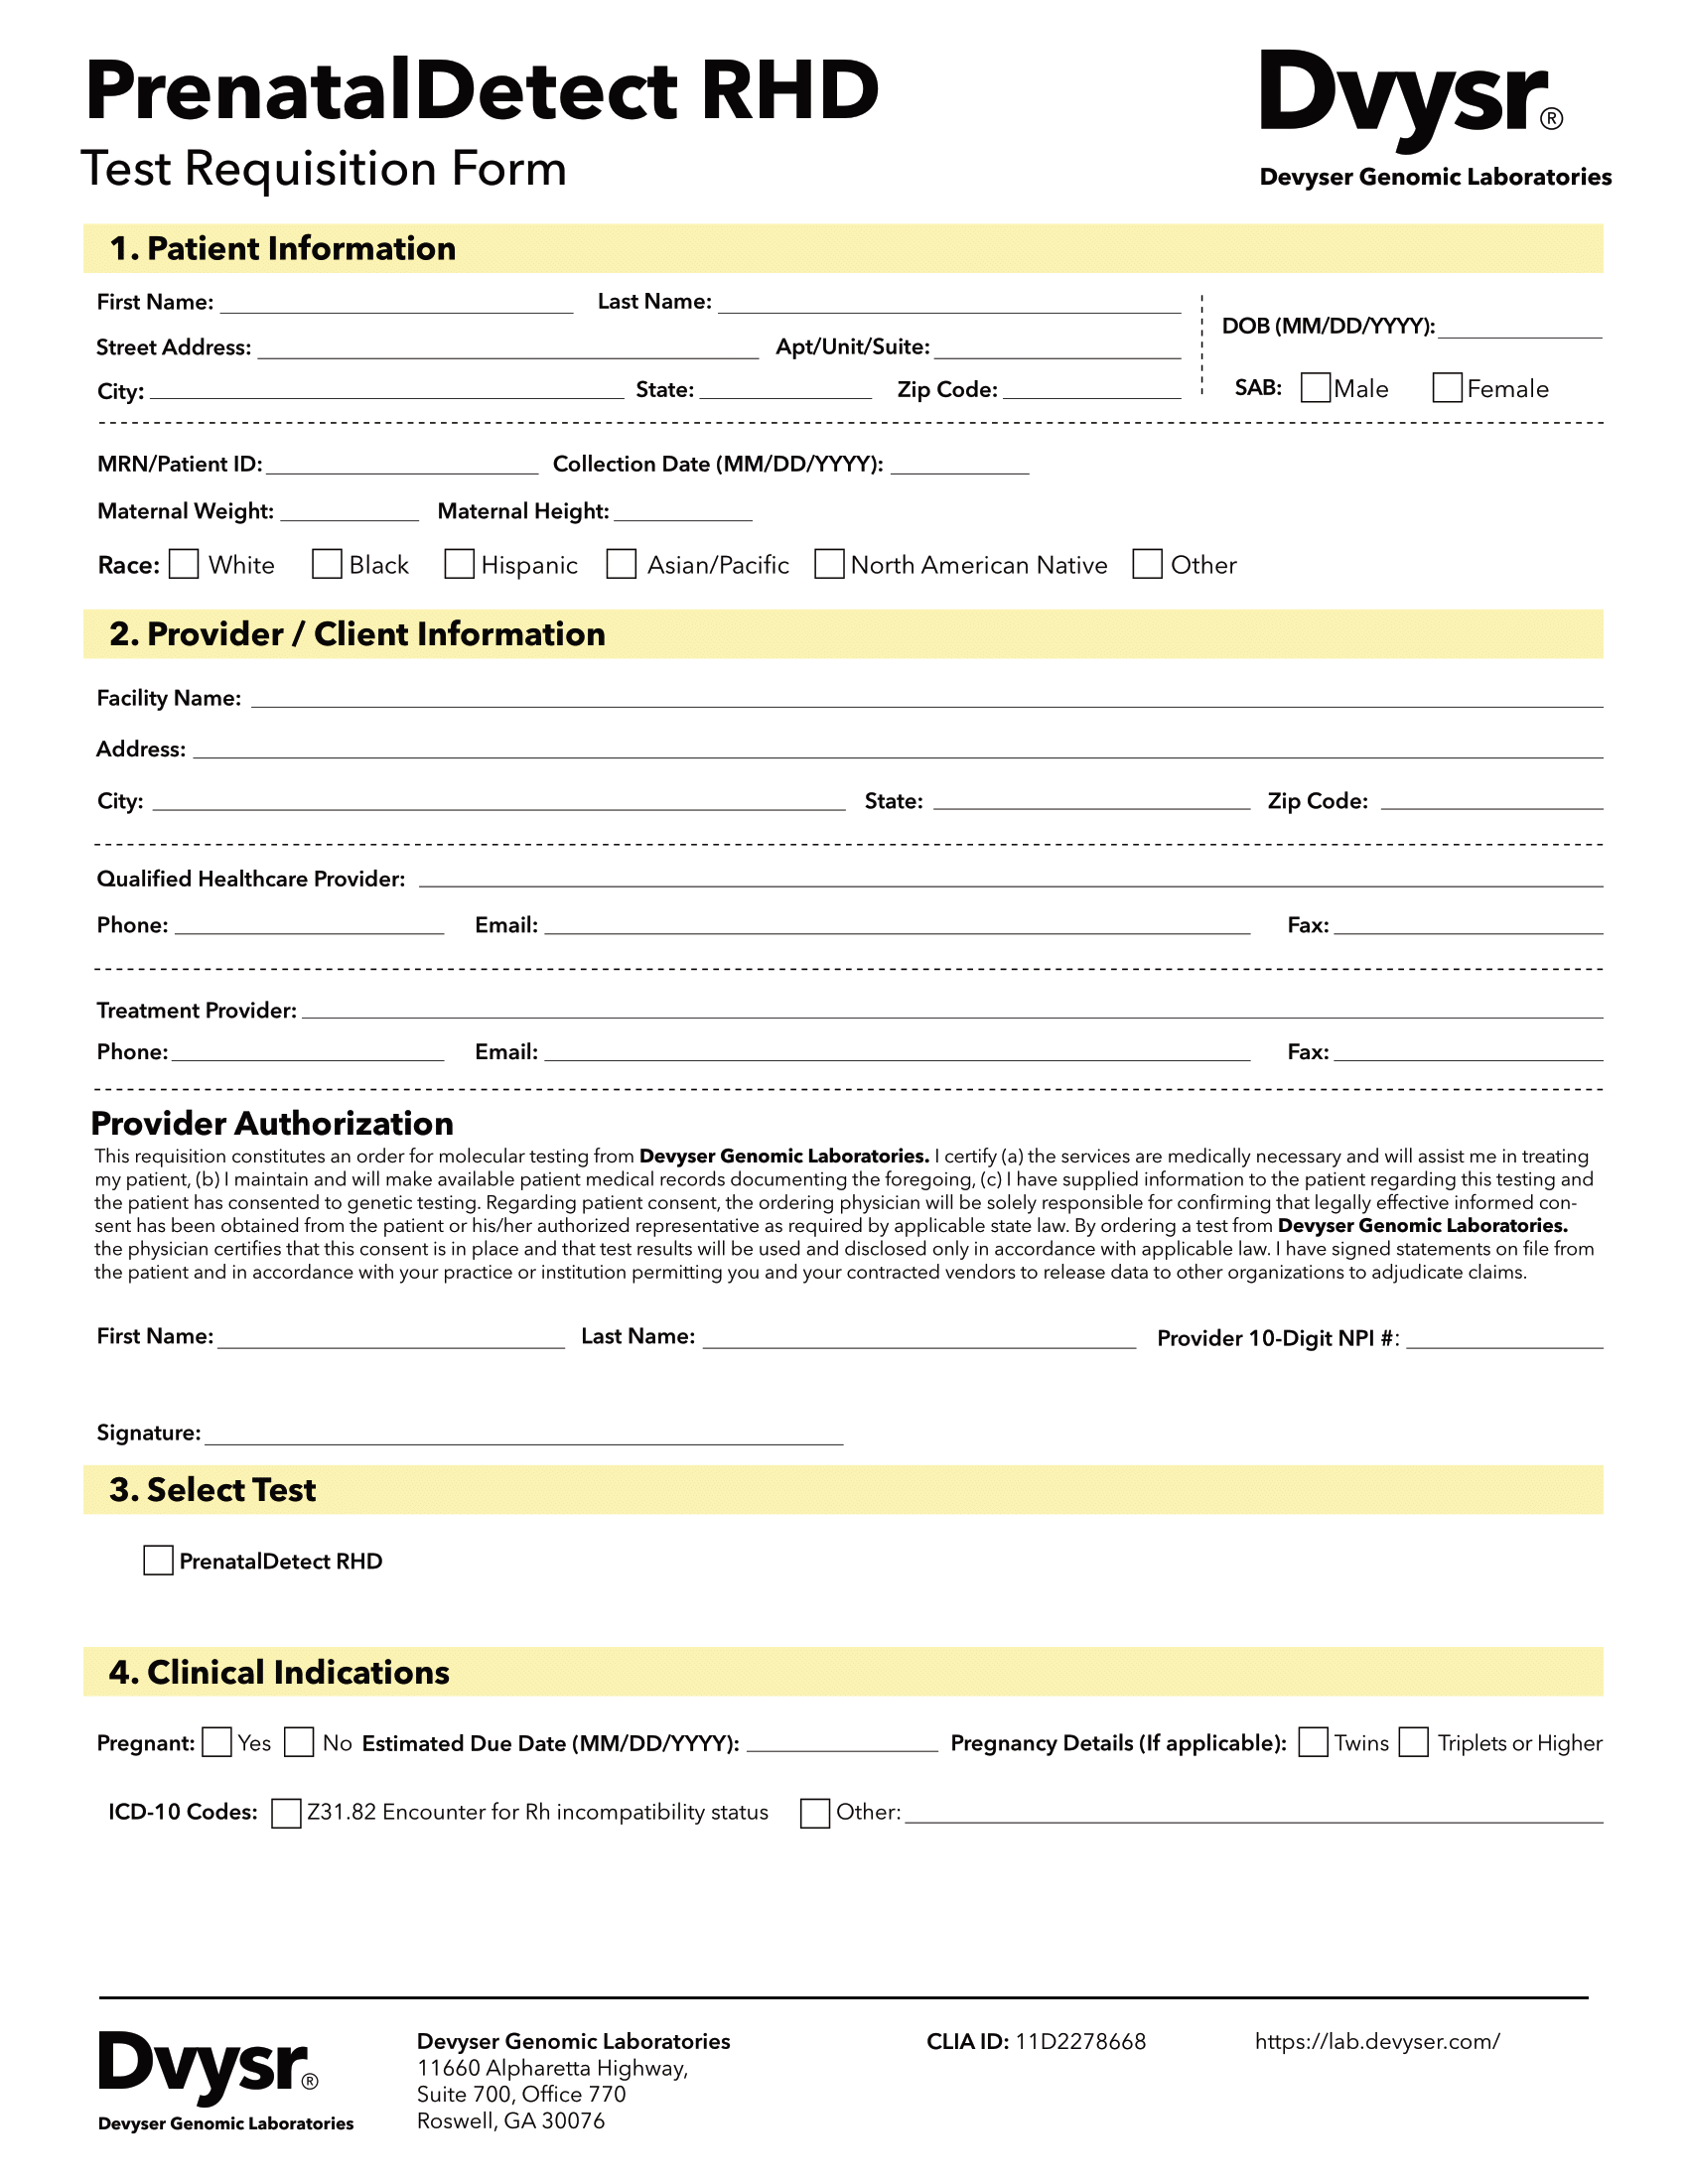 Test Requisition Form (TRF)